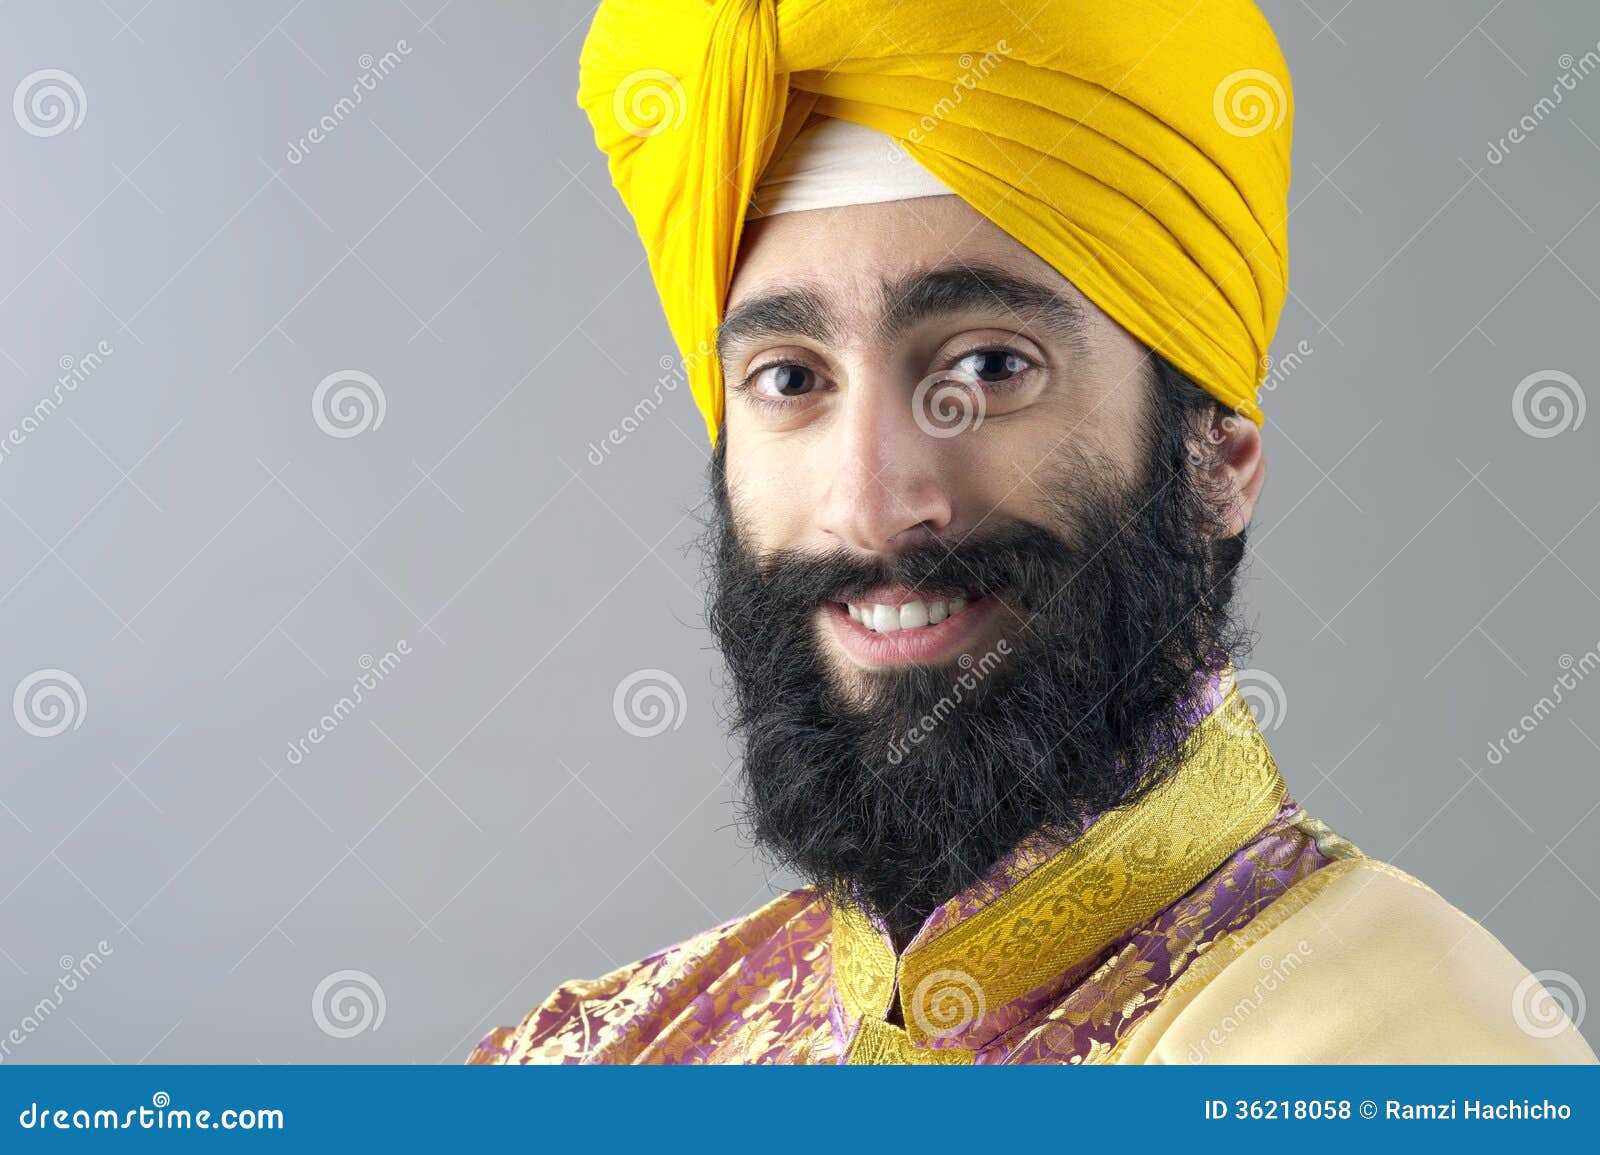 portrait of indian sikh man with bushy beard